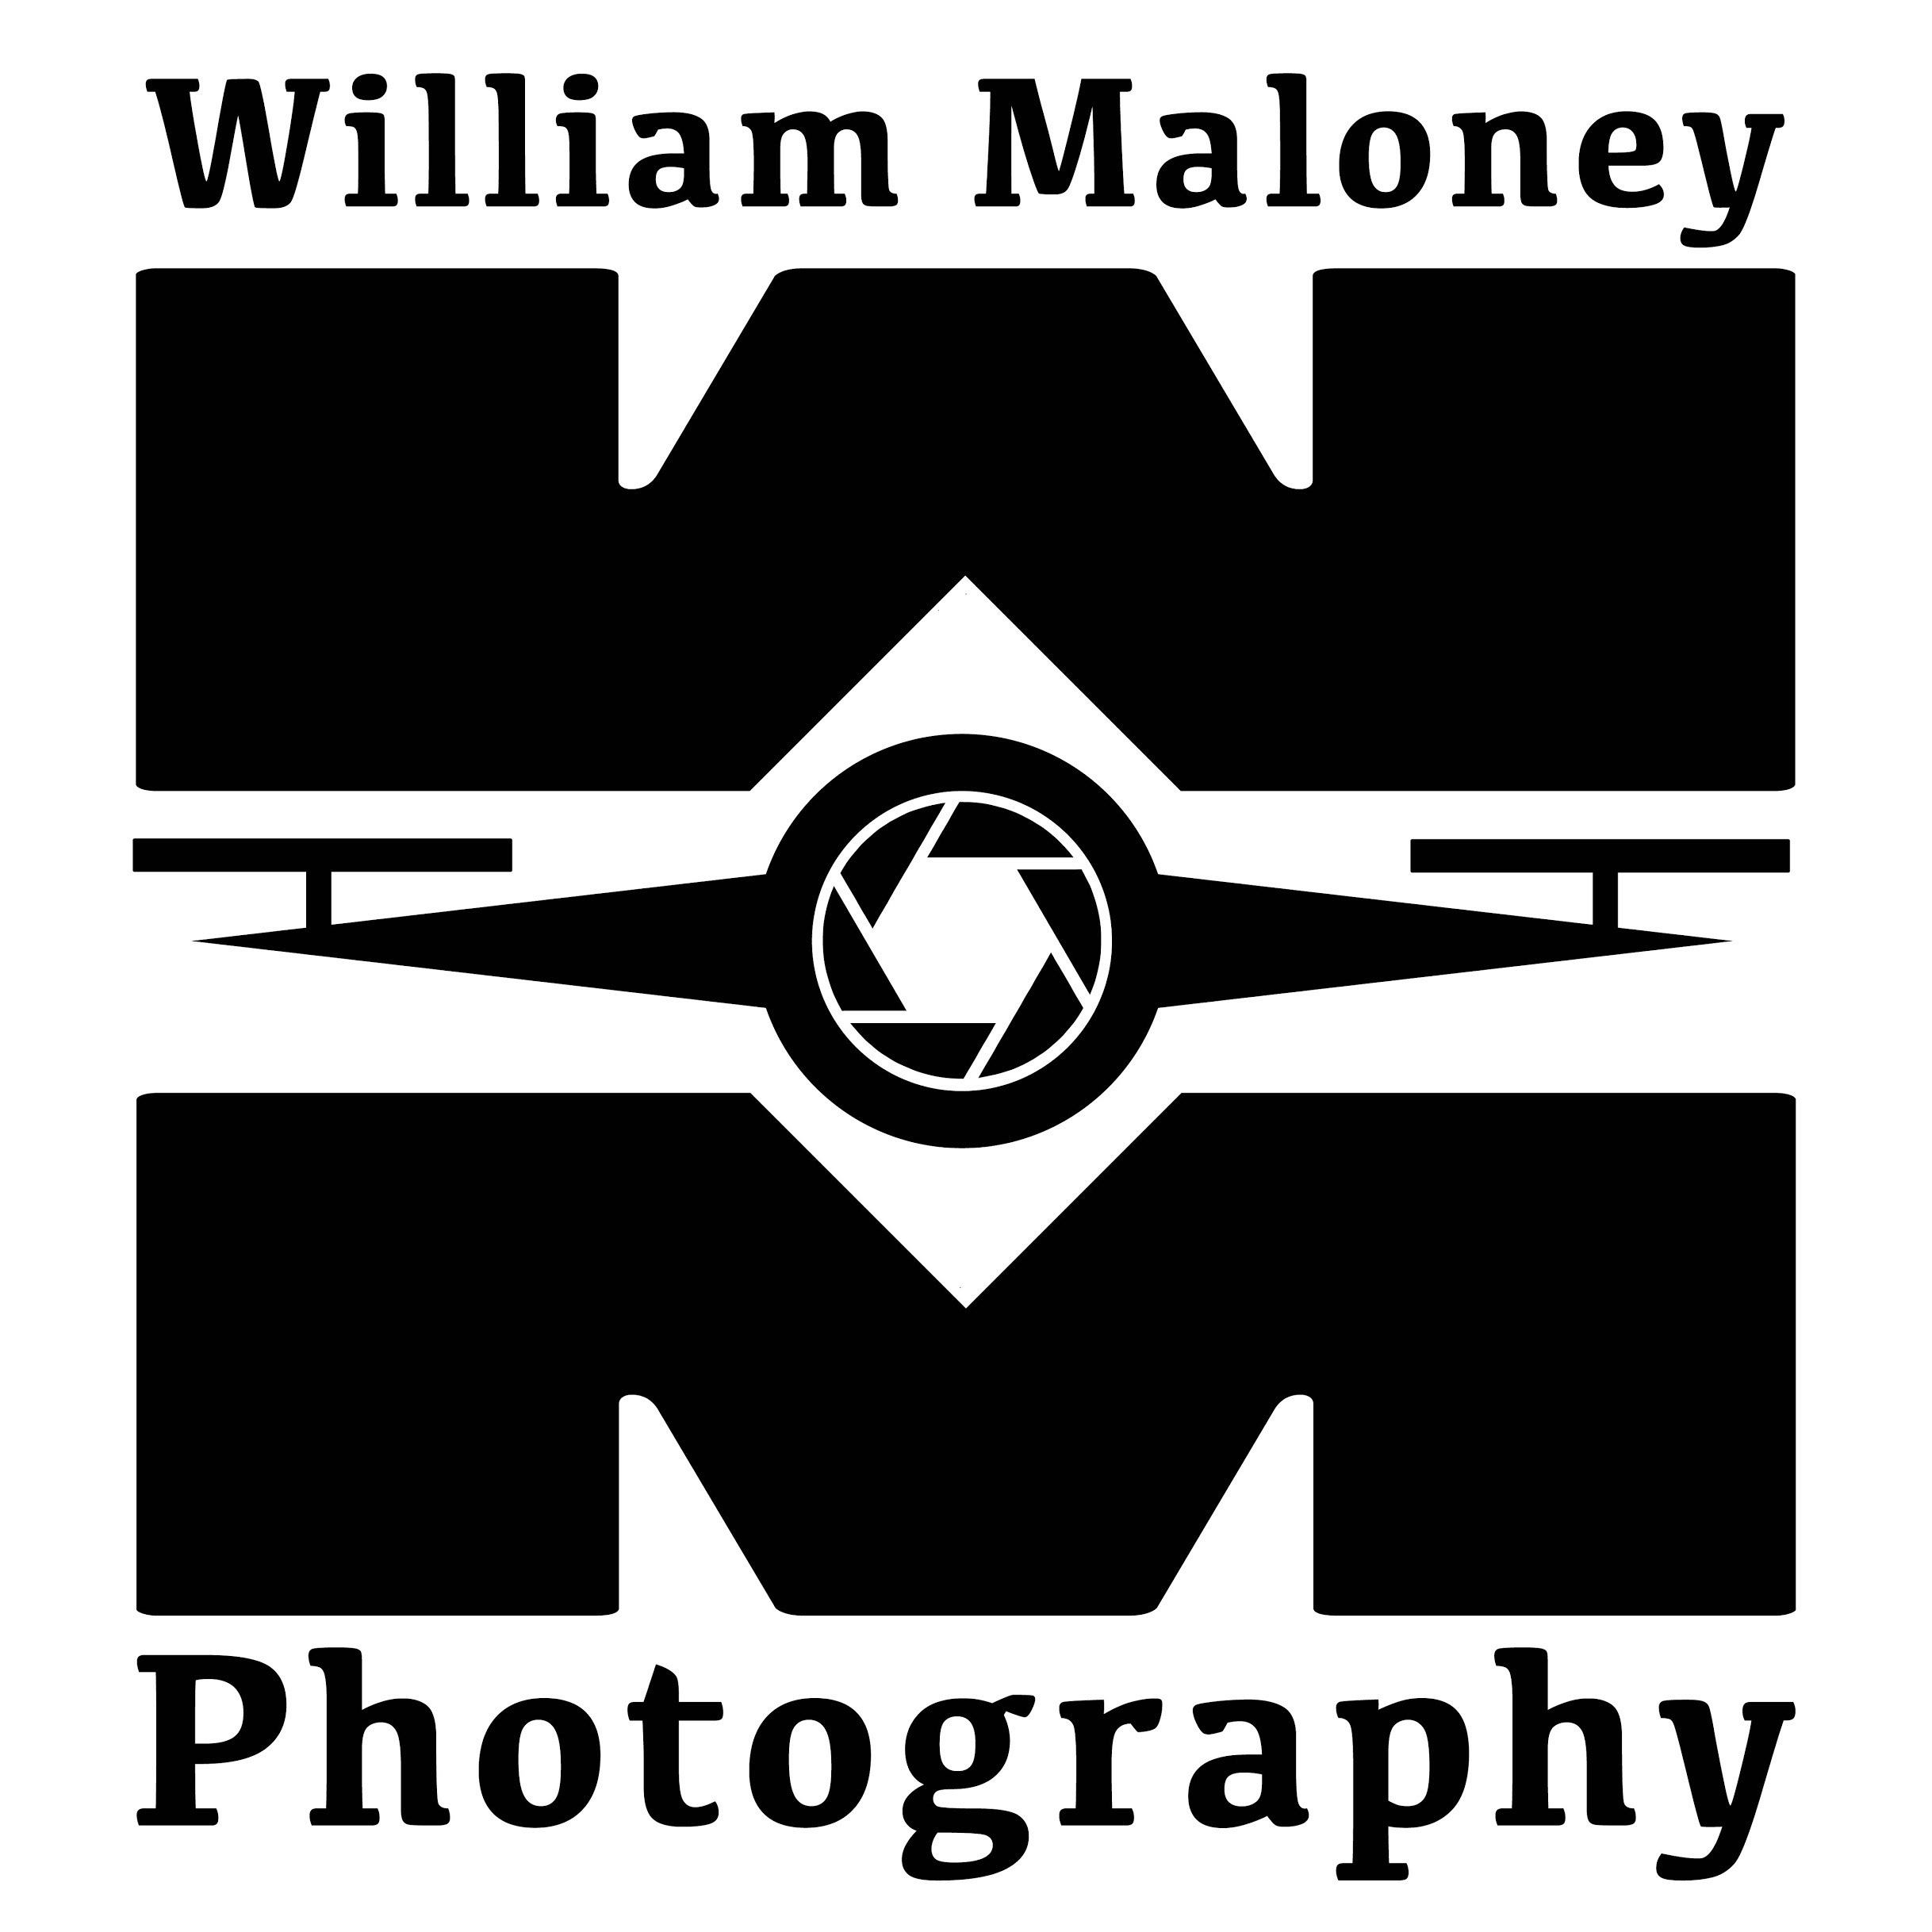 William Maloney